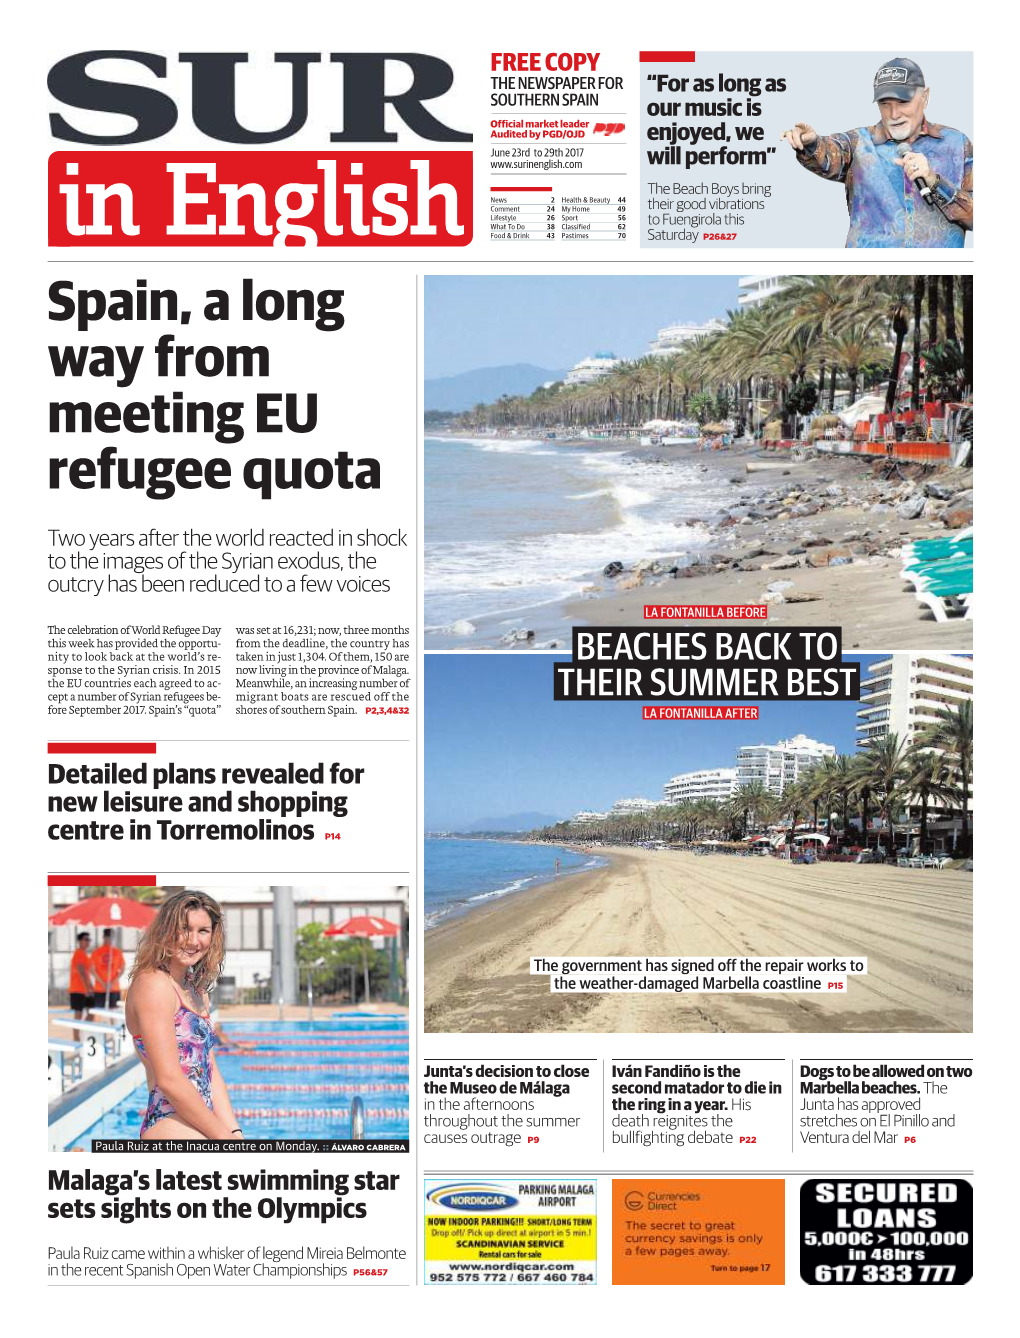 Spain, a Long Way from Meeting EU Refugee Quota